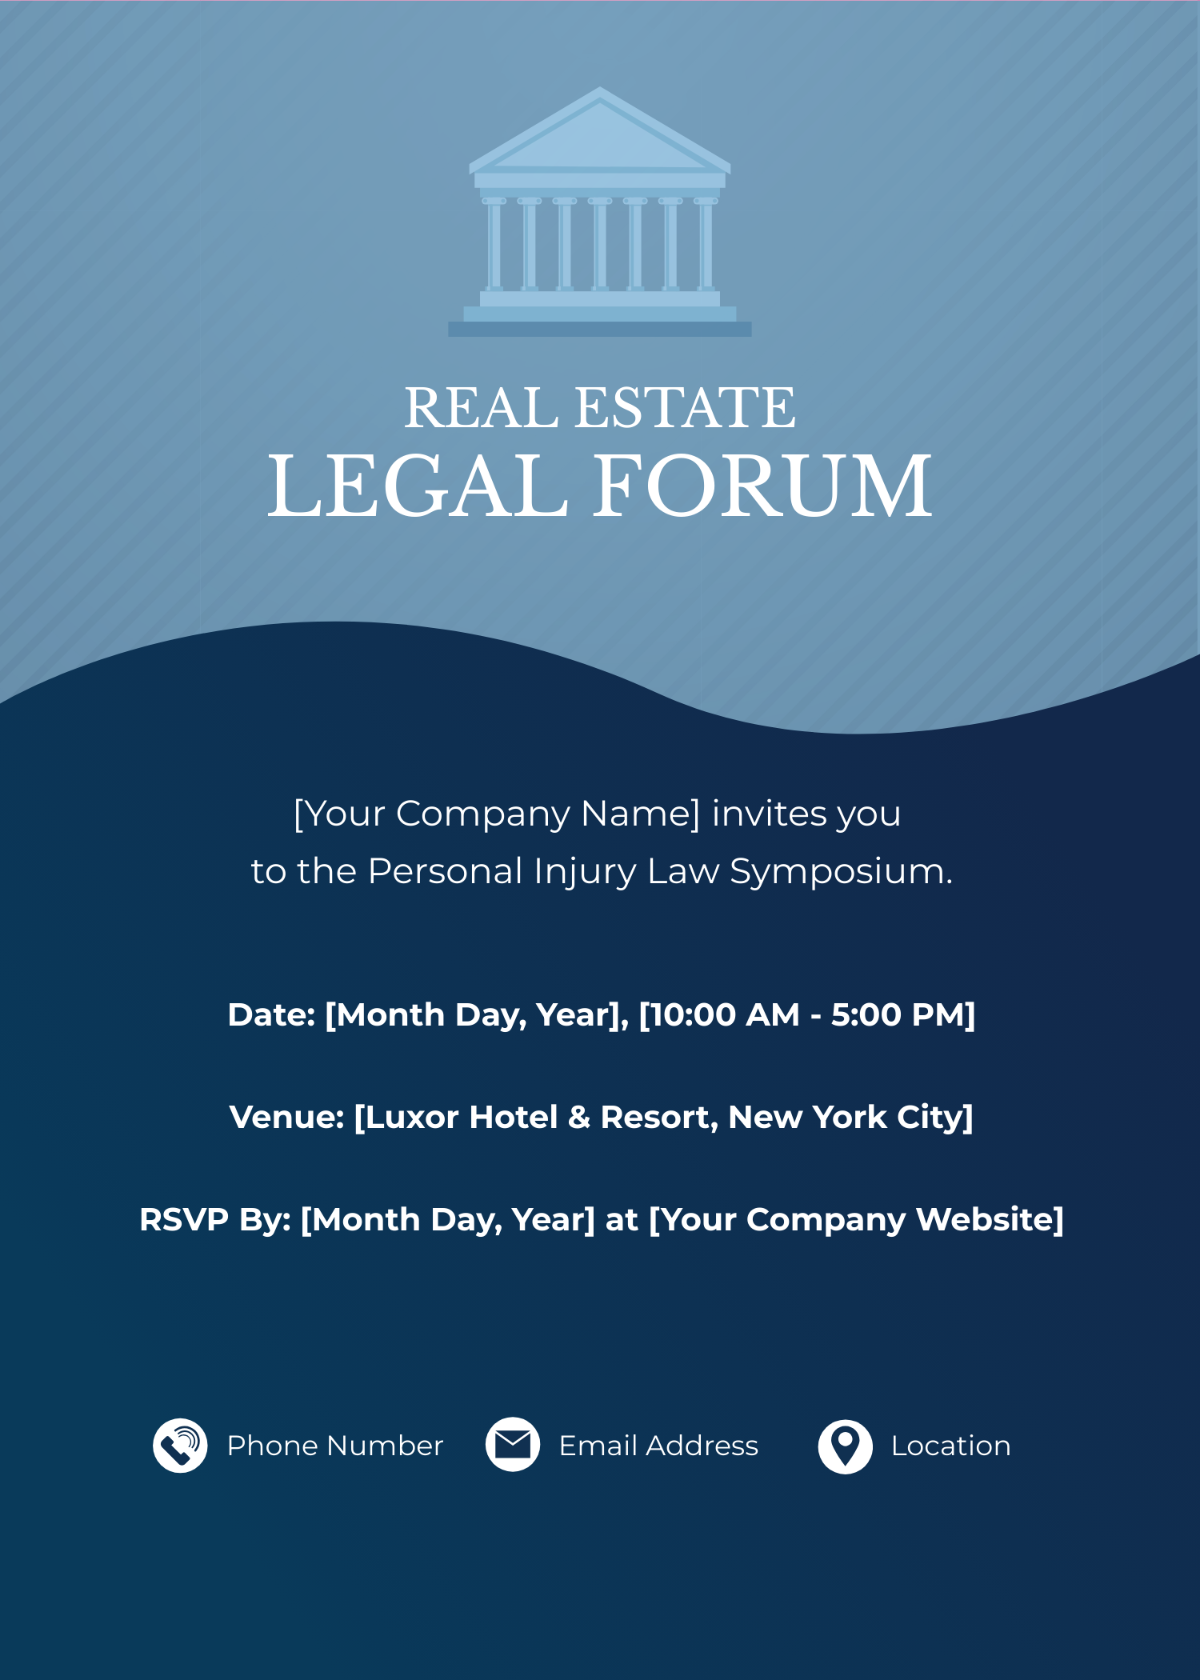 Real Estate Legal Forum Invitation Card